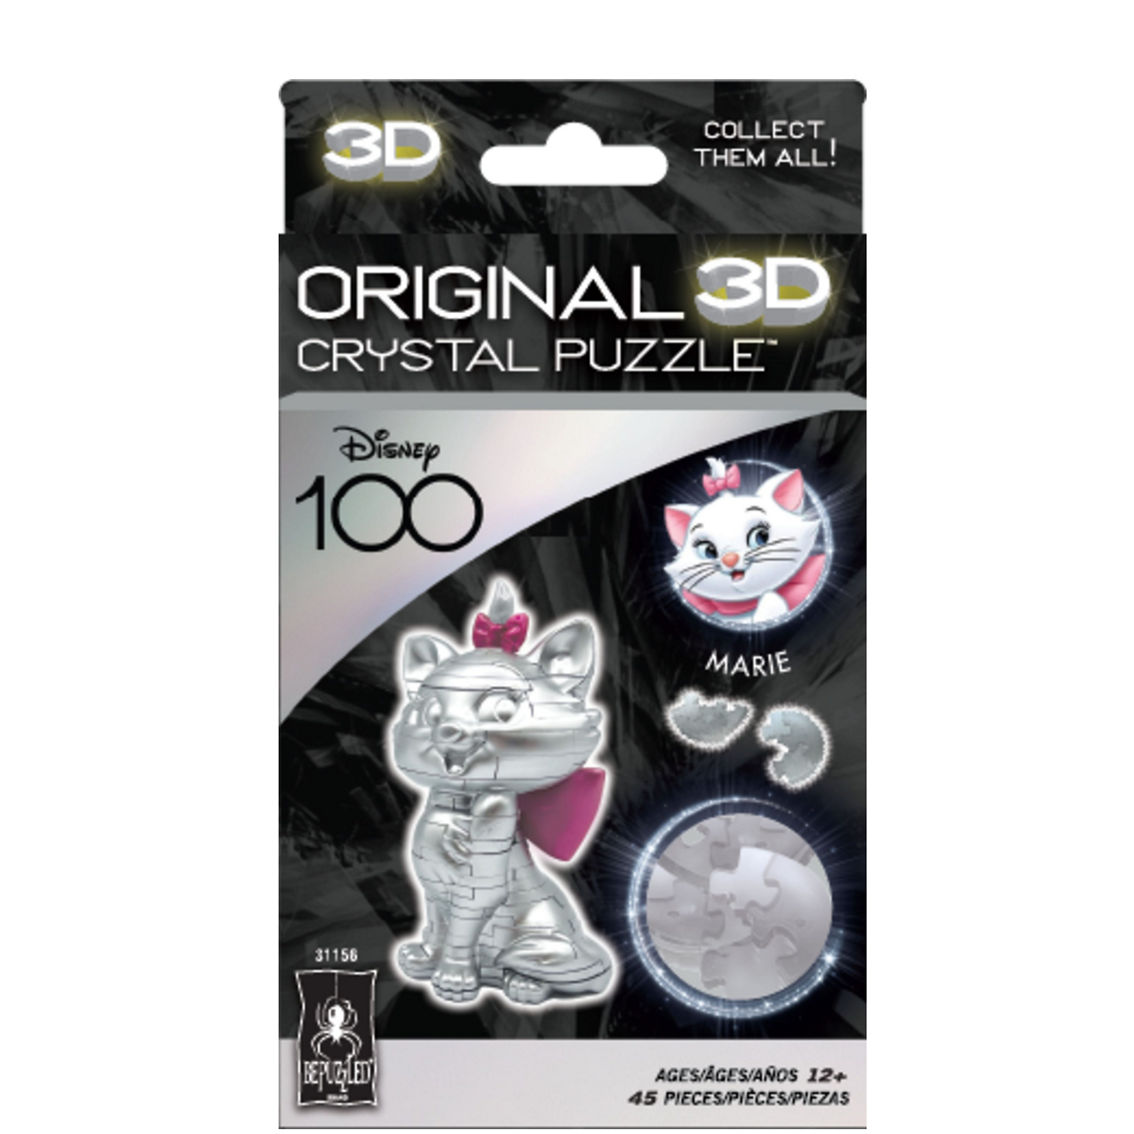 BePuzzled 3D Crystal Puzzle - Disney 100 Platinum Edition - Marie: 45 Pcs - Image 3 of 5